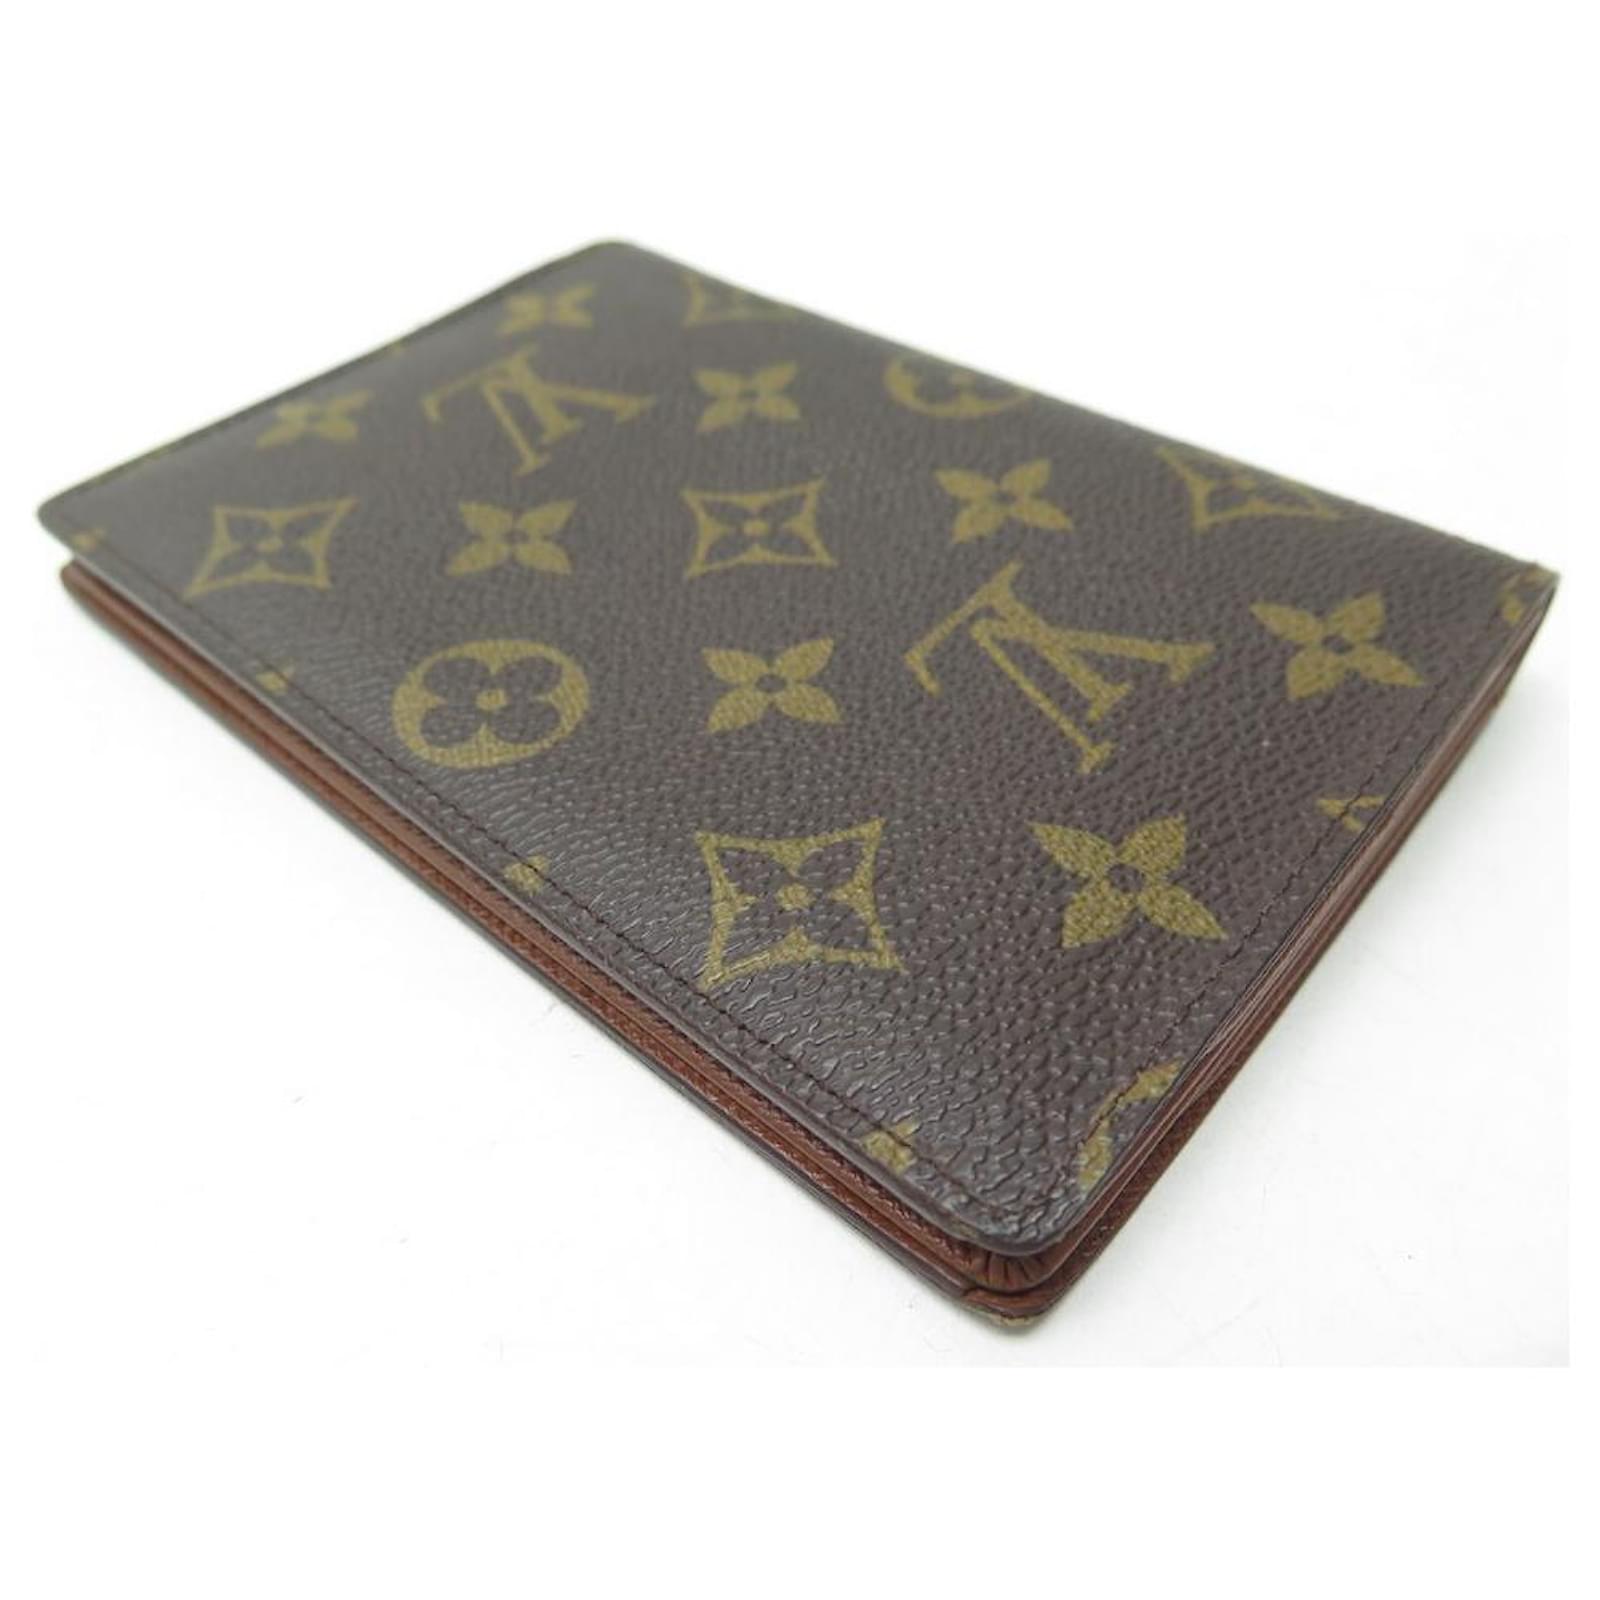 Louis Vuitton Vintage LV Monogram Card Holder - Brown Wallets, Accessories  - LOU773397